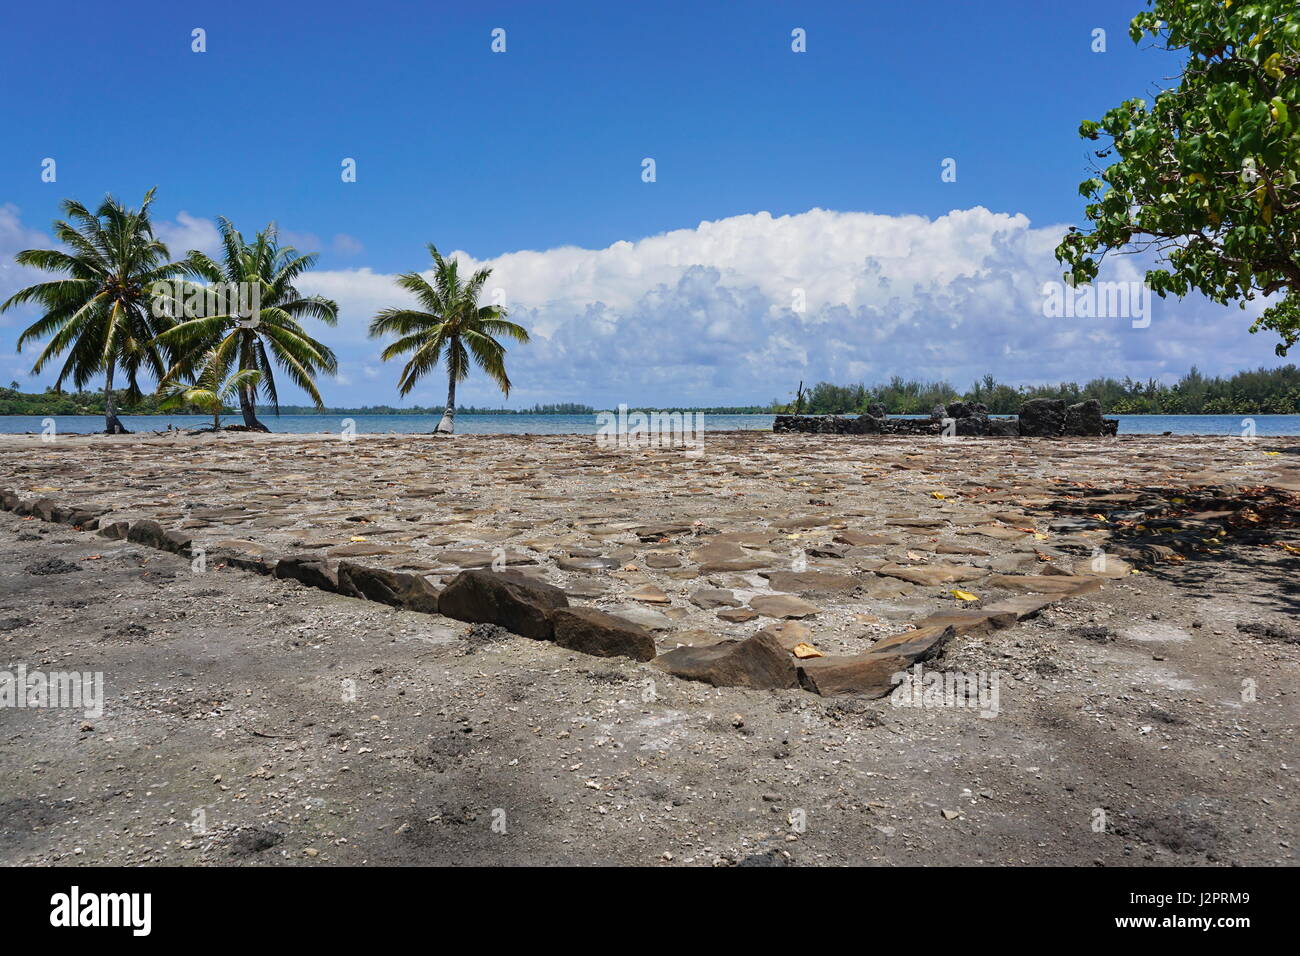 Religious structure called marae made with stones on the shore of the lake Fauna Nui, Maeva, Huahine Nui island, French Polynesia Stock Photo